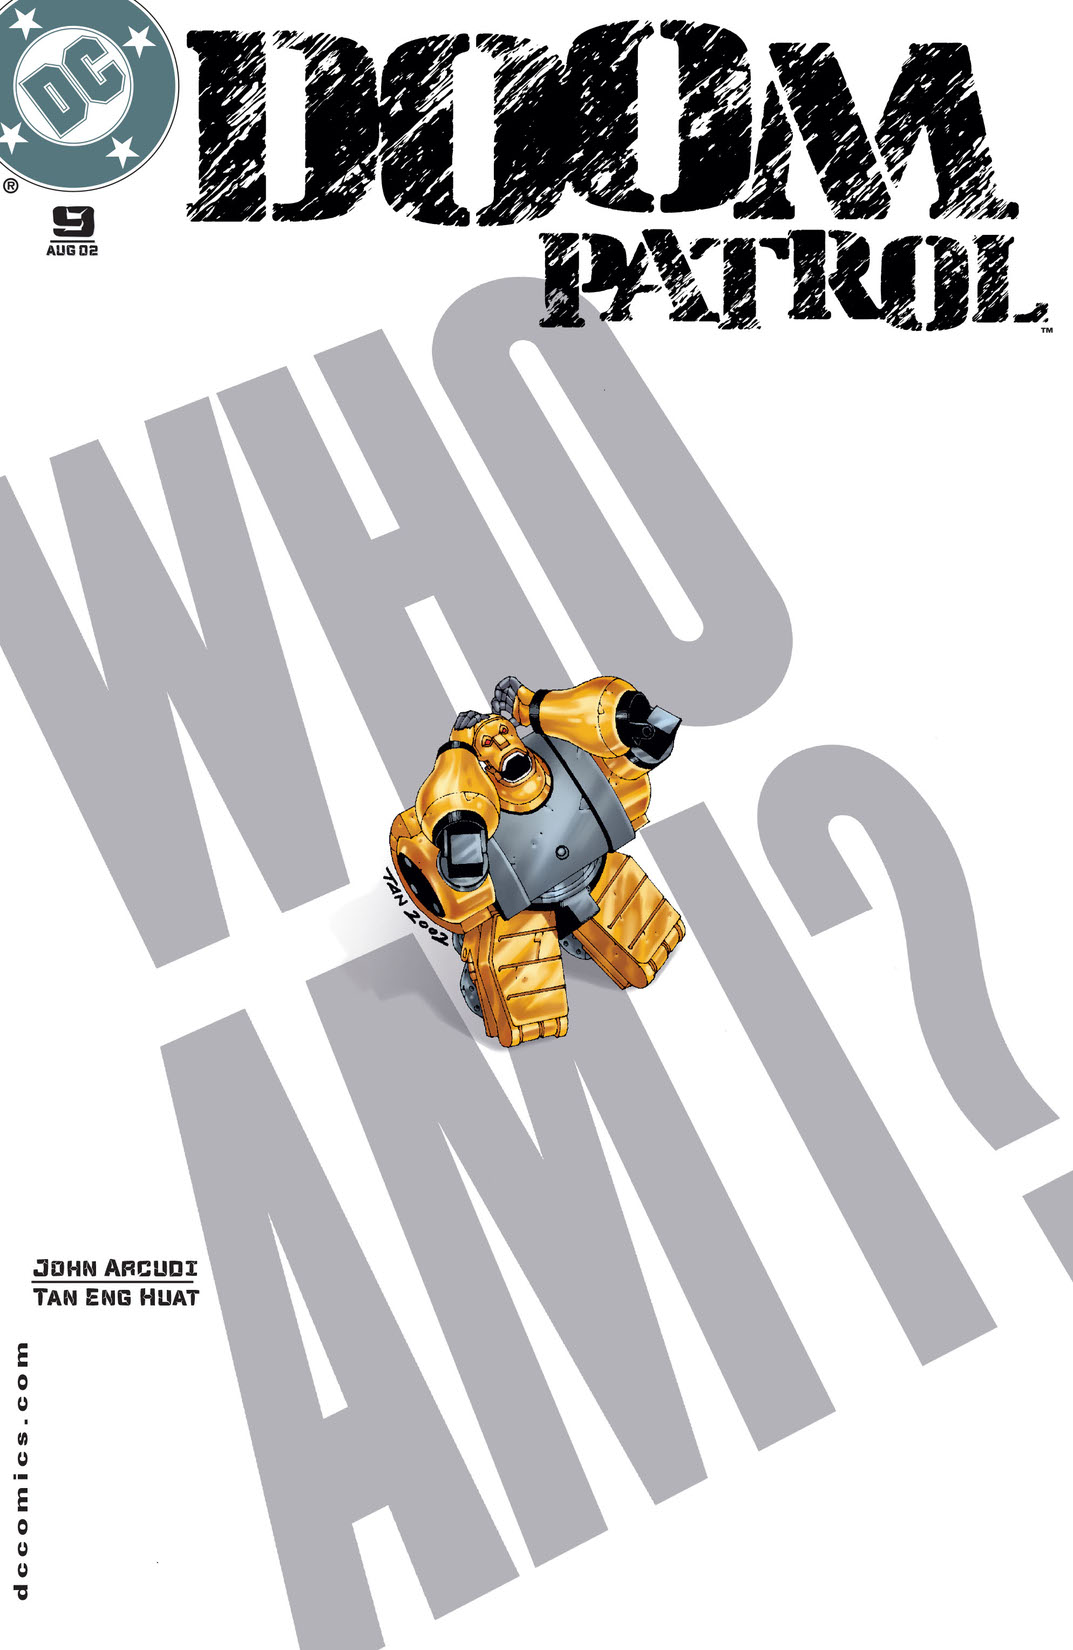 Doom Patrol (2001-) #9 preview images